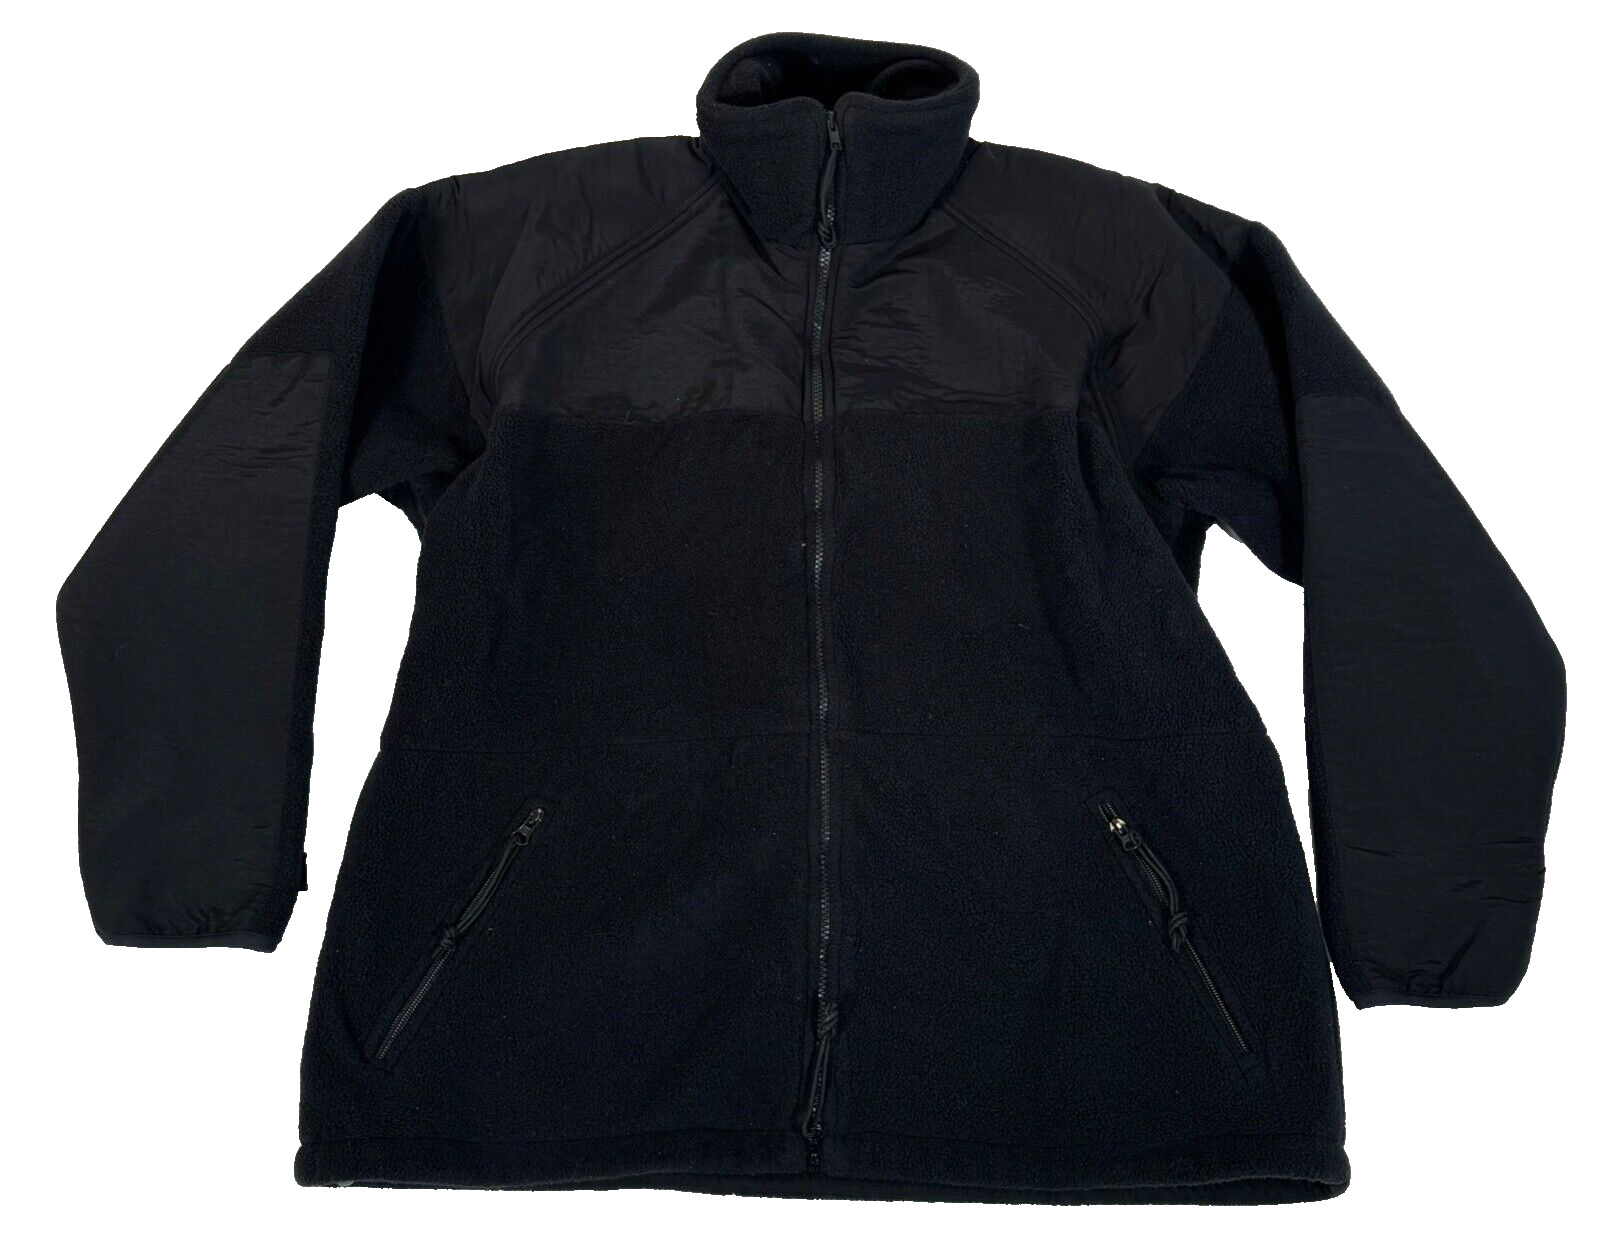 DSCP US Army Military Polartec Cold Weather Fleece Shirt Jacket Black Large